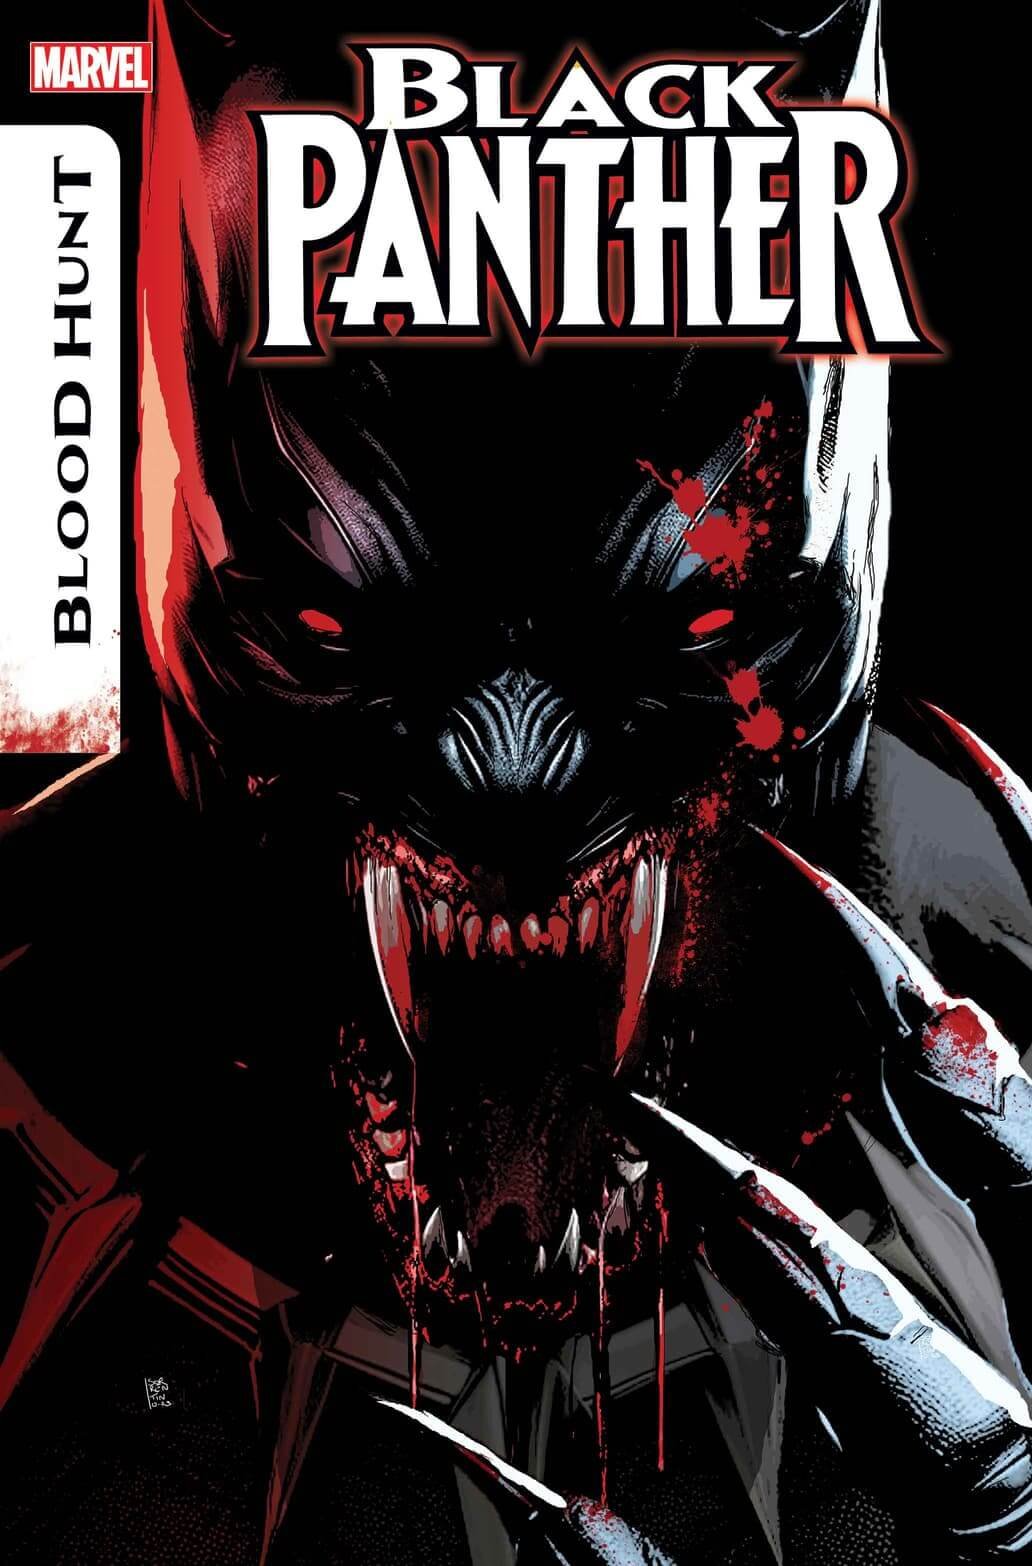 Couverture de Black Panther : Blood Hunt 1 par Andrea Sorrentino